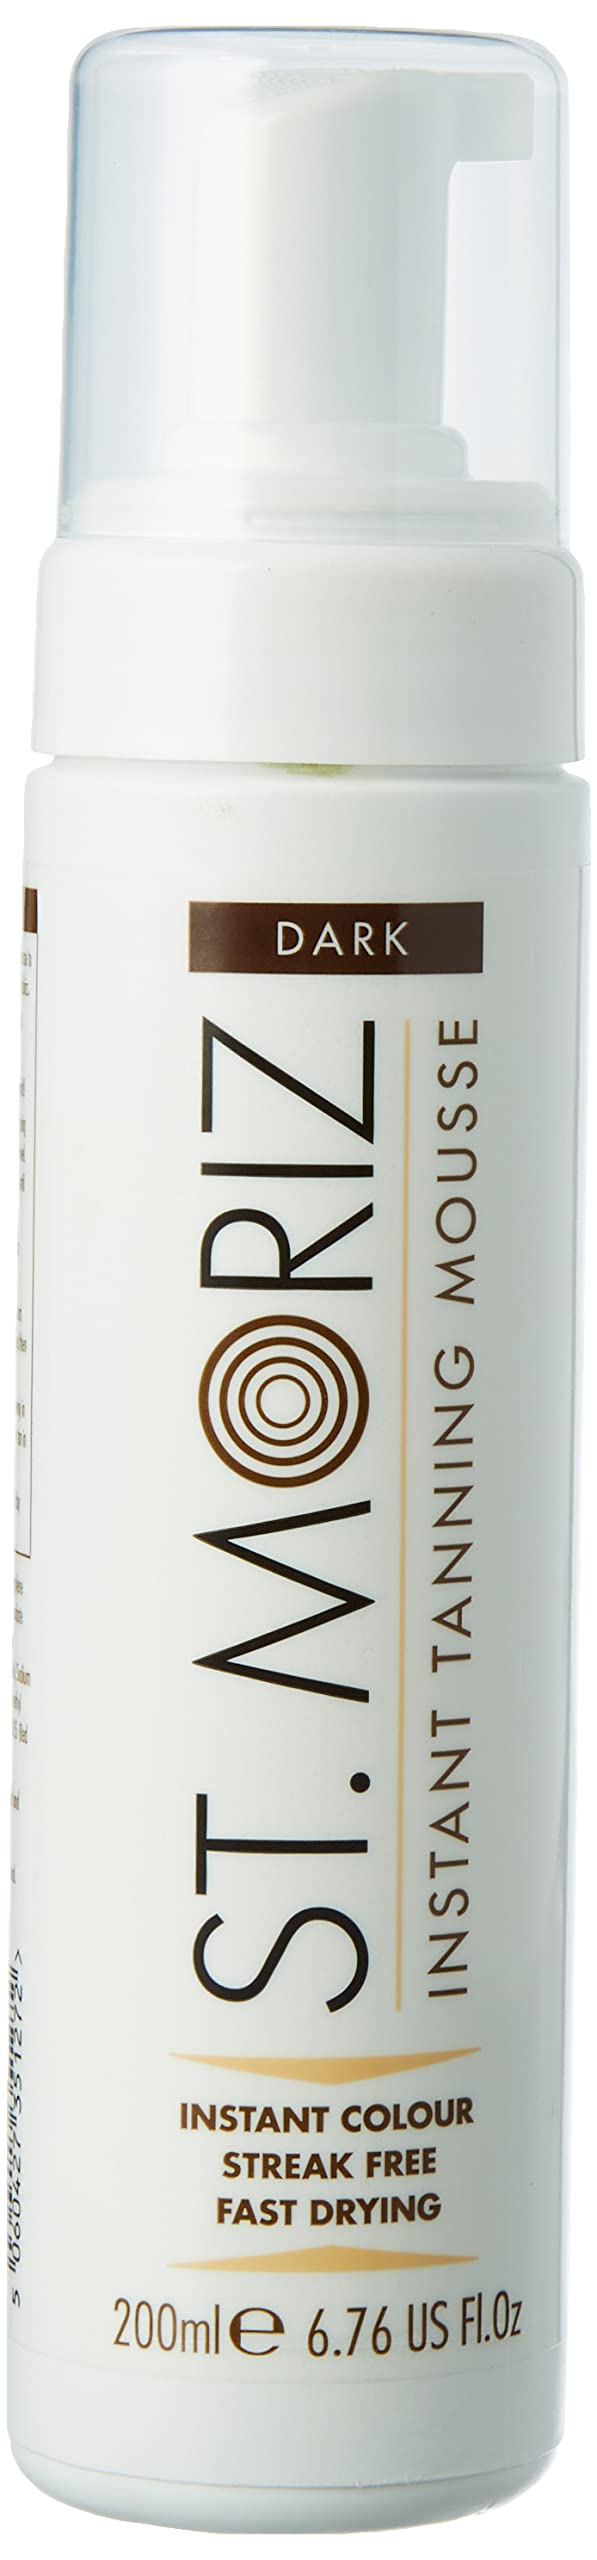 St Moriz Self Tan Range Instant Self Tanning Mousse Dark 6.76oz (200ml)